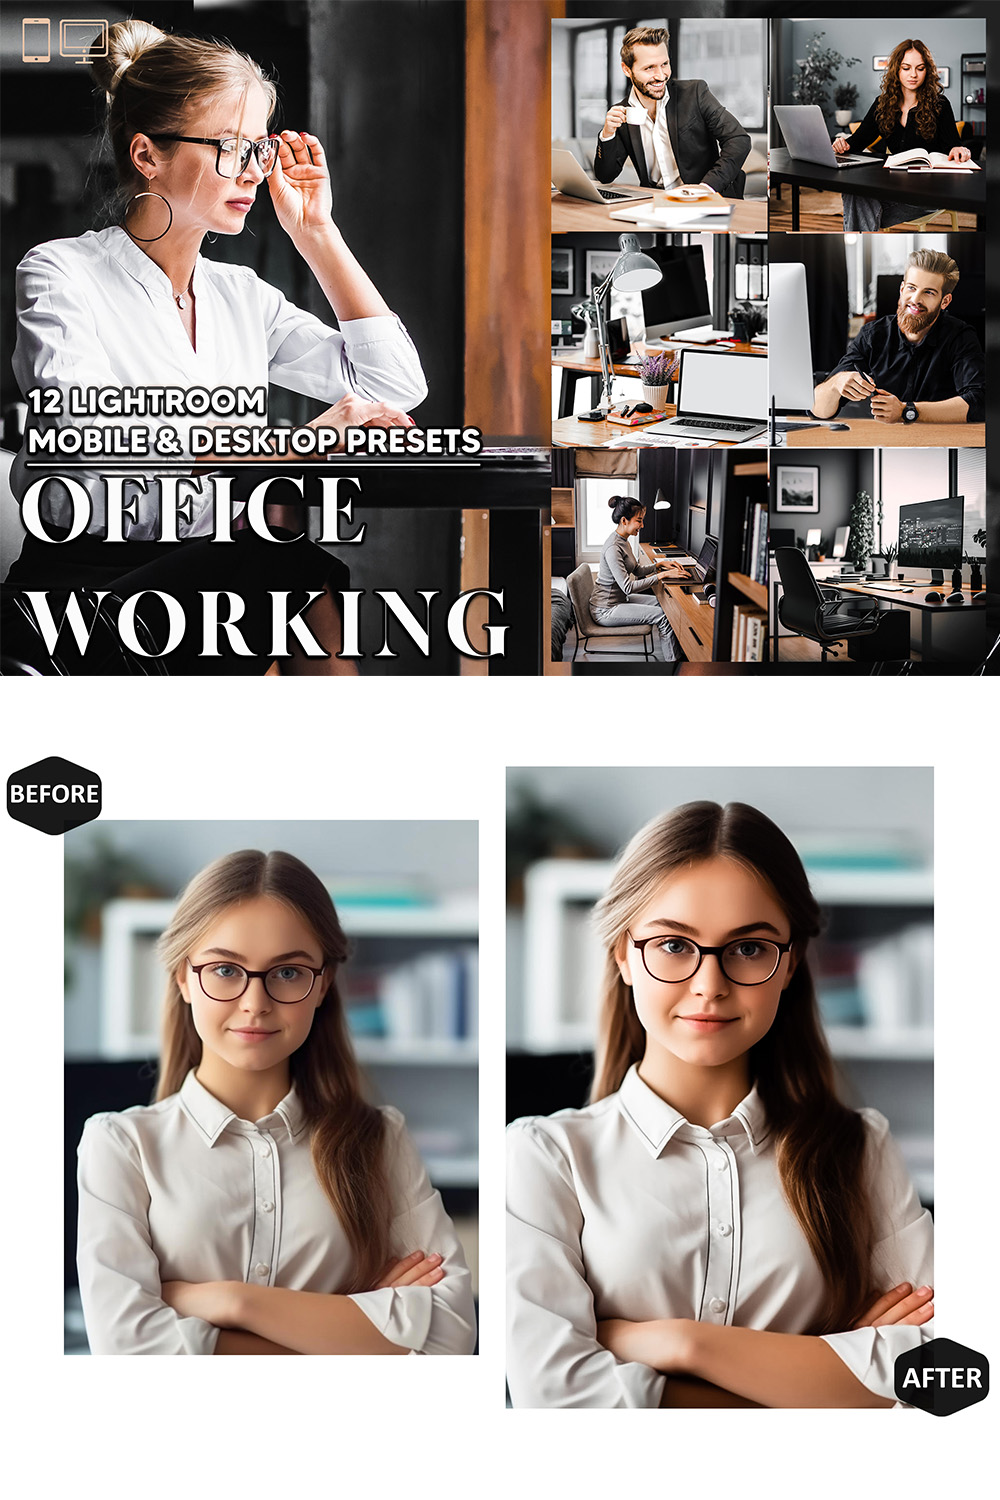 12 Office Working Lightroom Presets, Corporate Mobile Preset, Business Desktop LR Filter Lifestyle Theme For Blogger Portrait Instagram pinterest preview image.